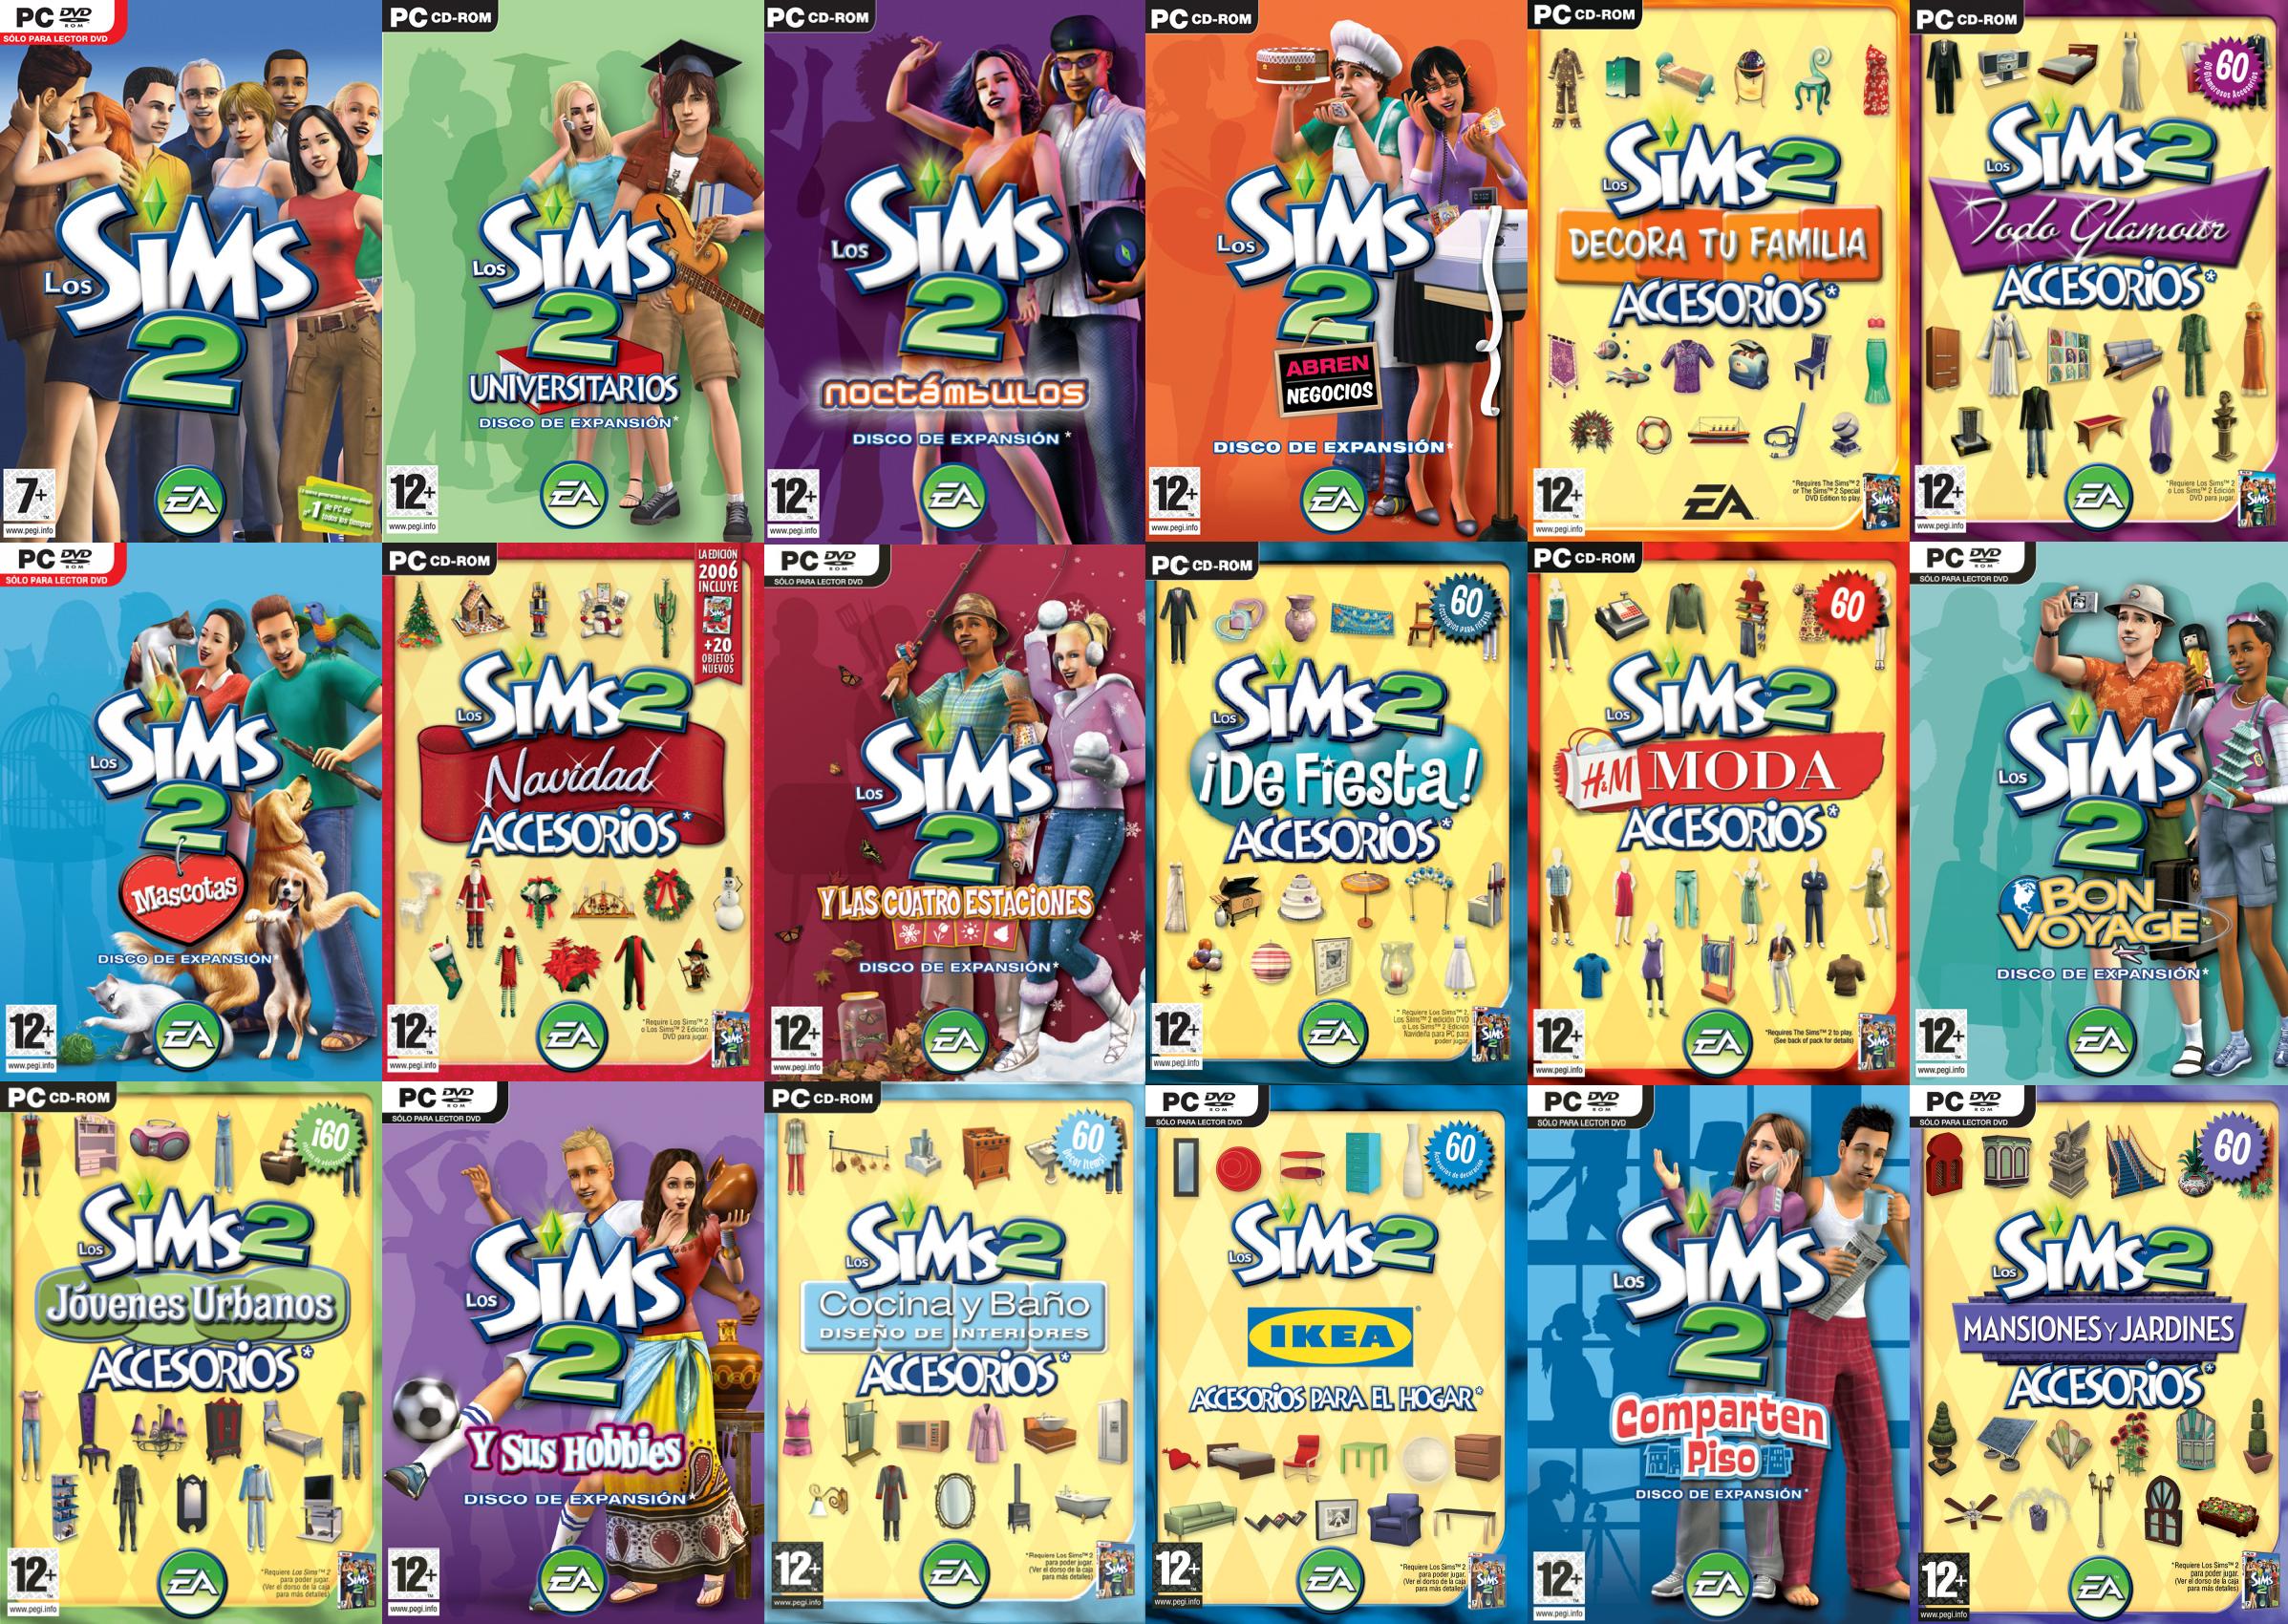 Sims 2 collection. SIMS 2 диск. Симс 2 ультимейт коллекшн. SIMS 2 дополнения. Симс 2 Ultimate collection.